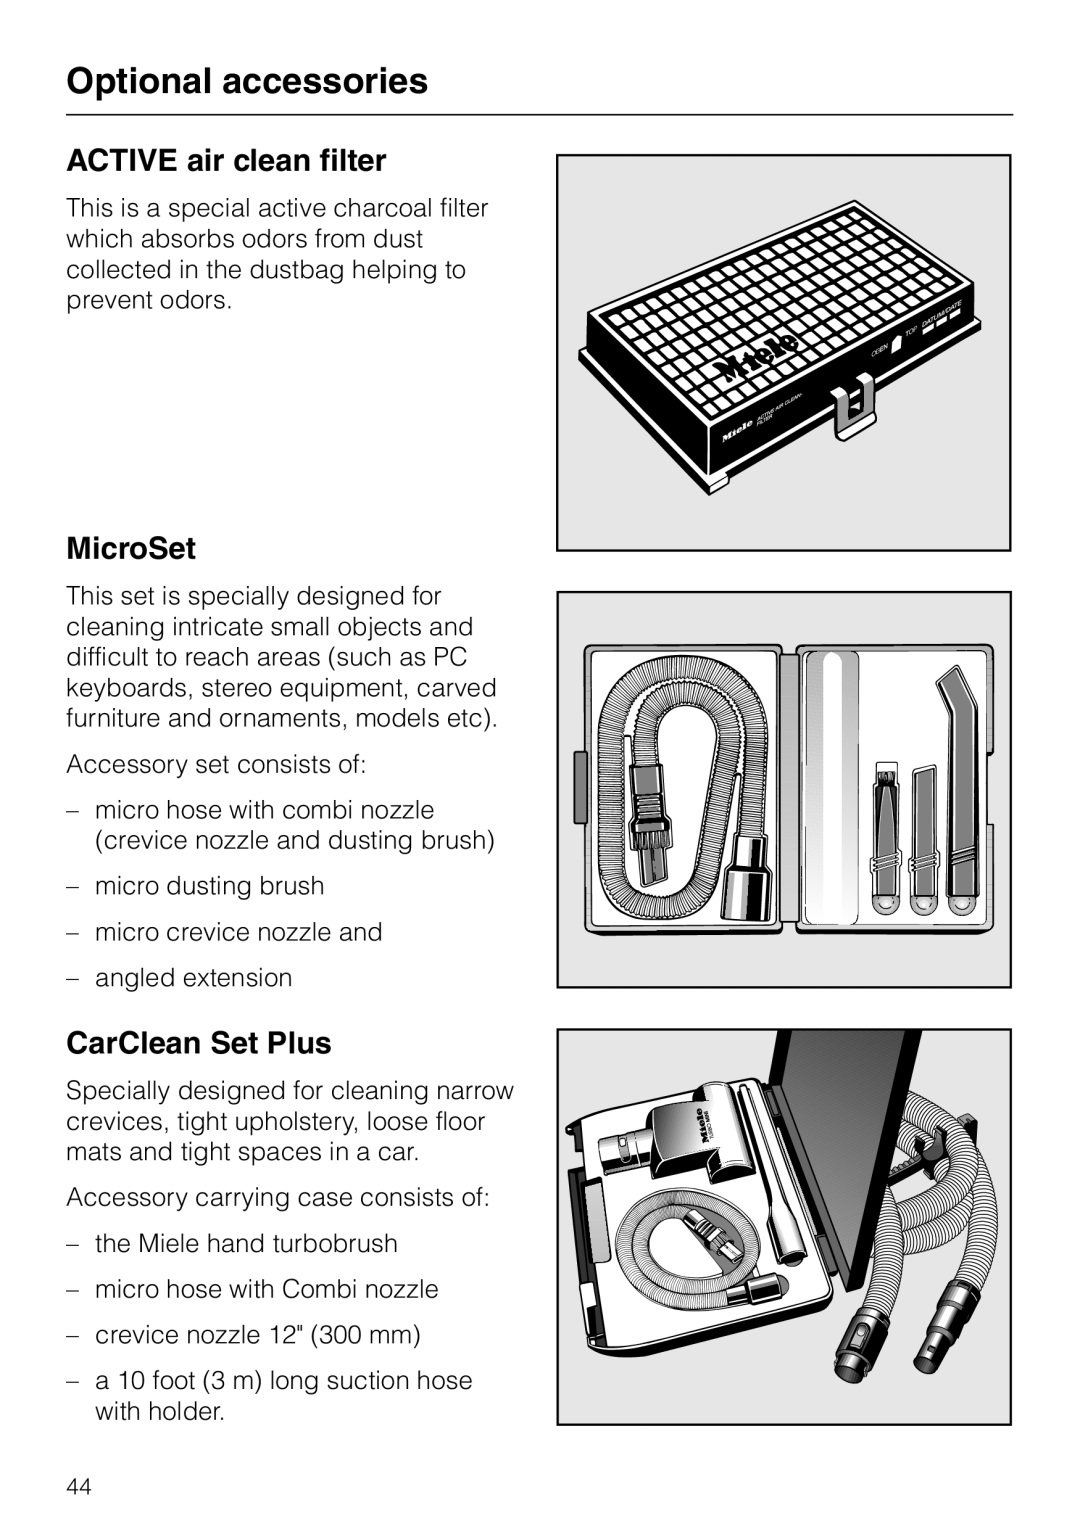 Miele S 558 manual ACTIVE air clean filter, MicroSet, CarClean Set Plus, Optional accessories 